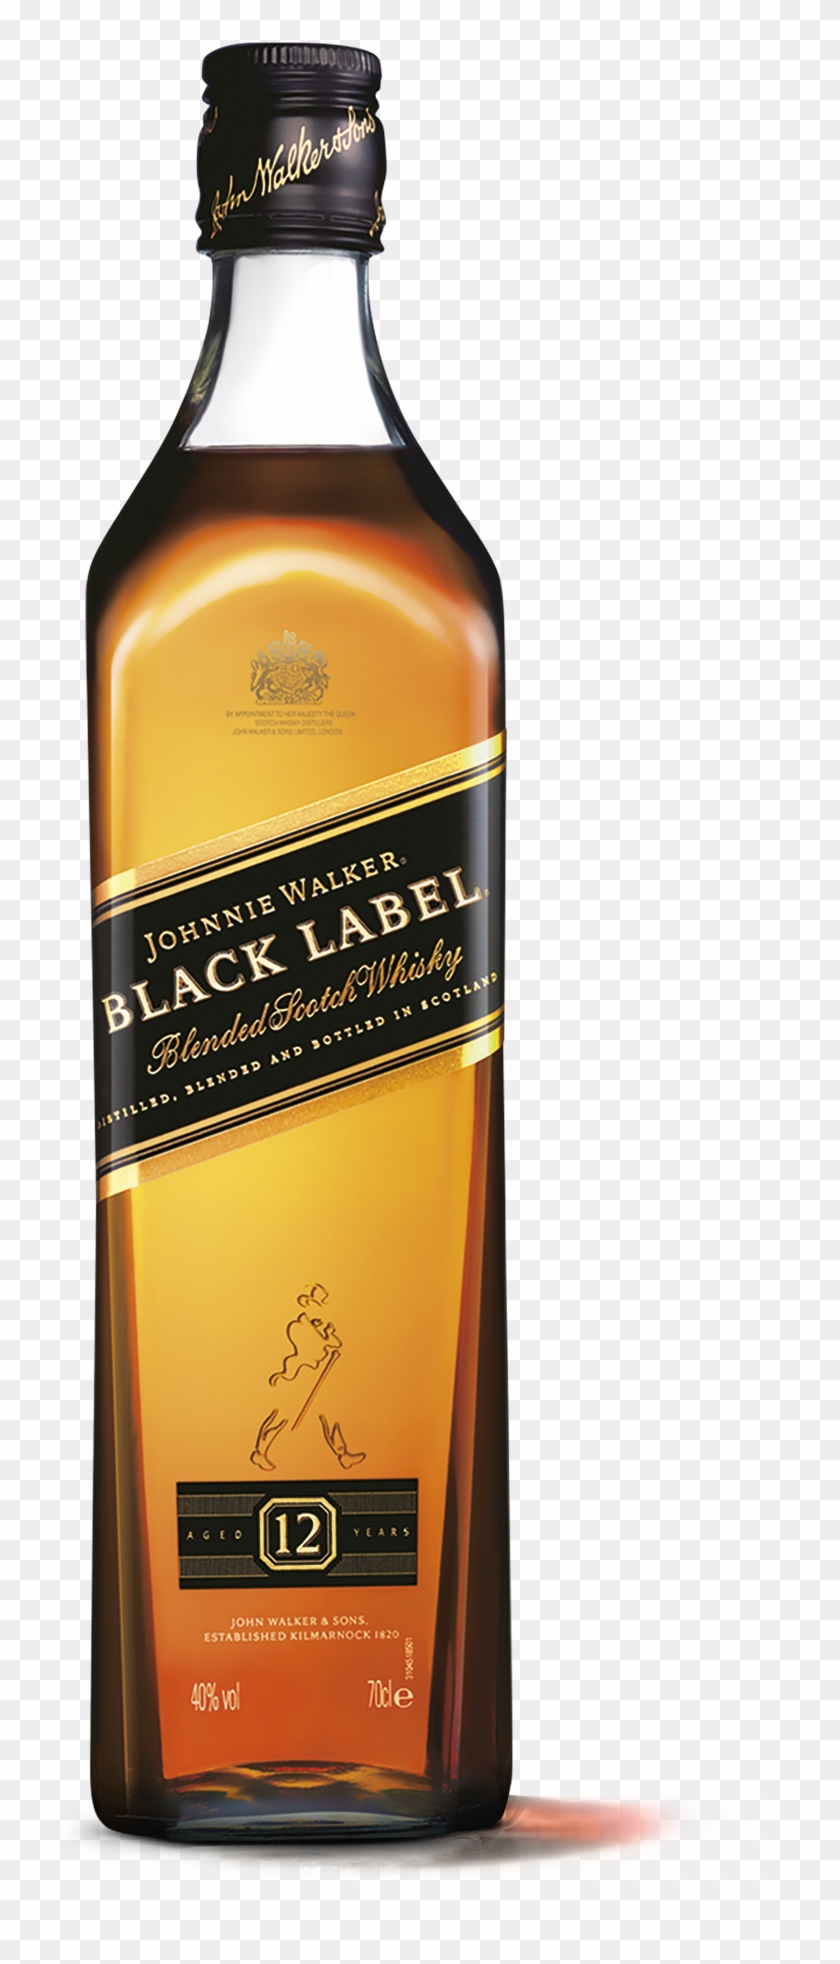 Johnnie Walker Is The World's Number One Scotch Whisky - Johnnie Walker Black Label #680589